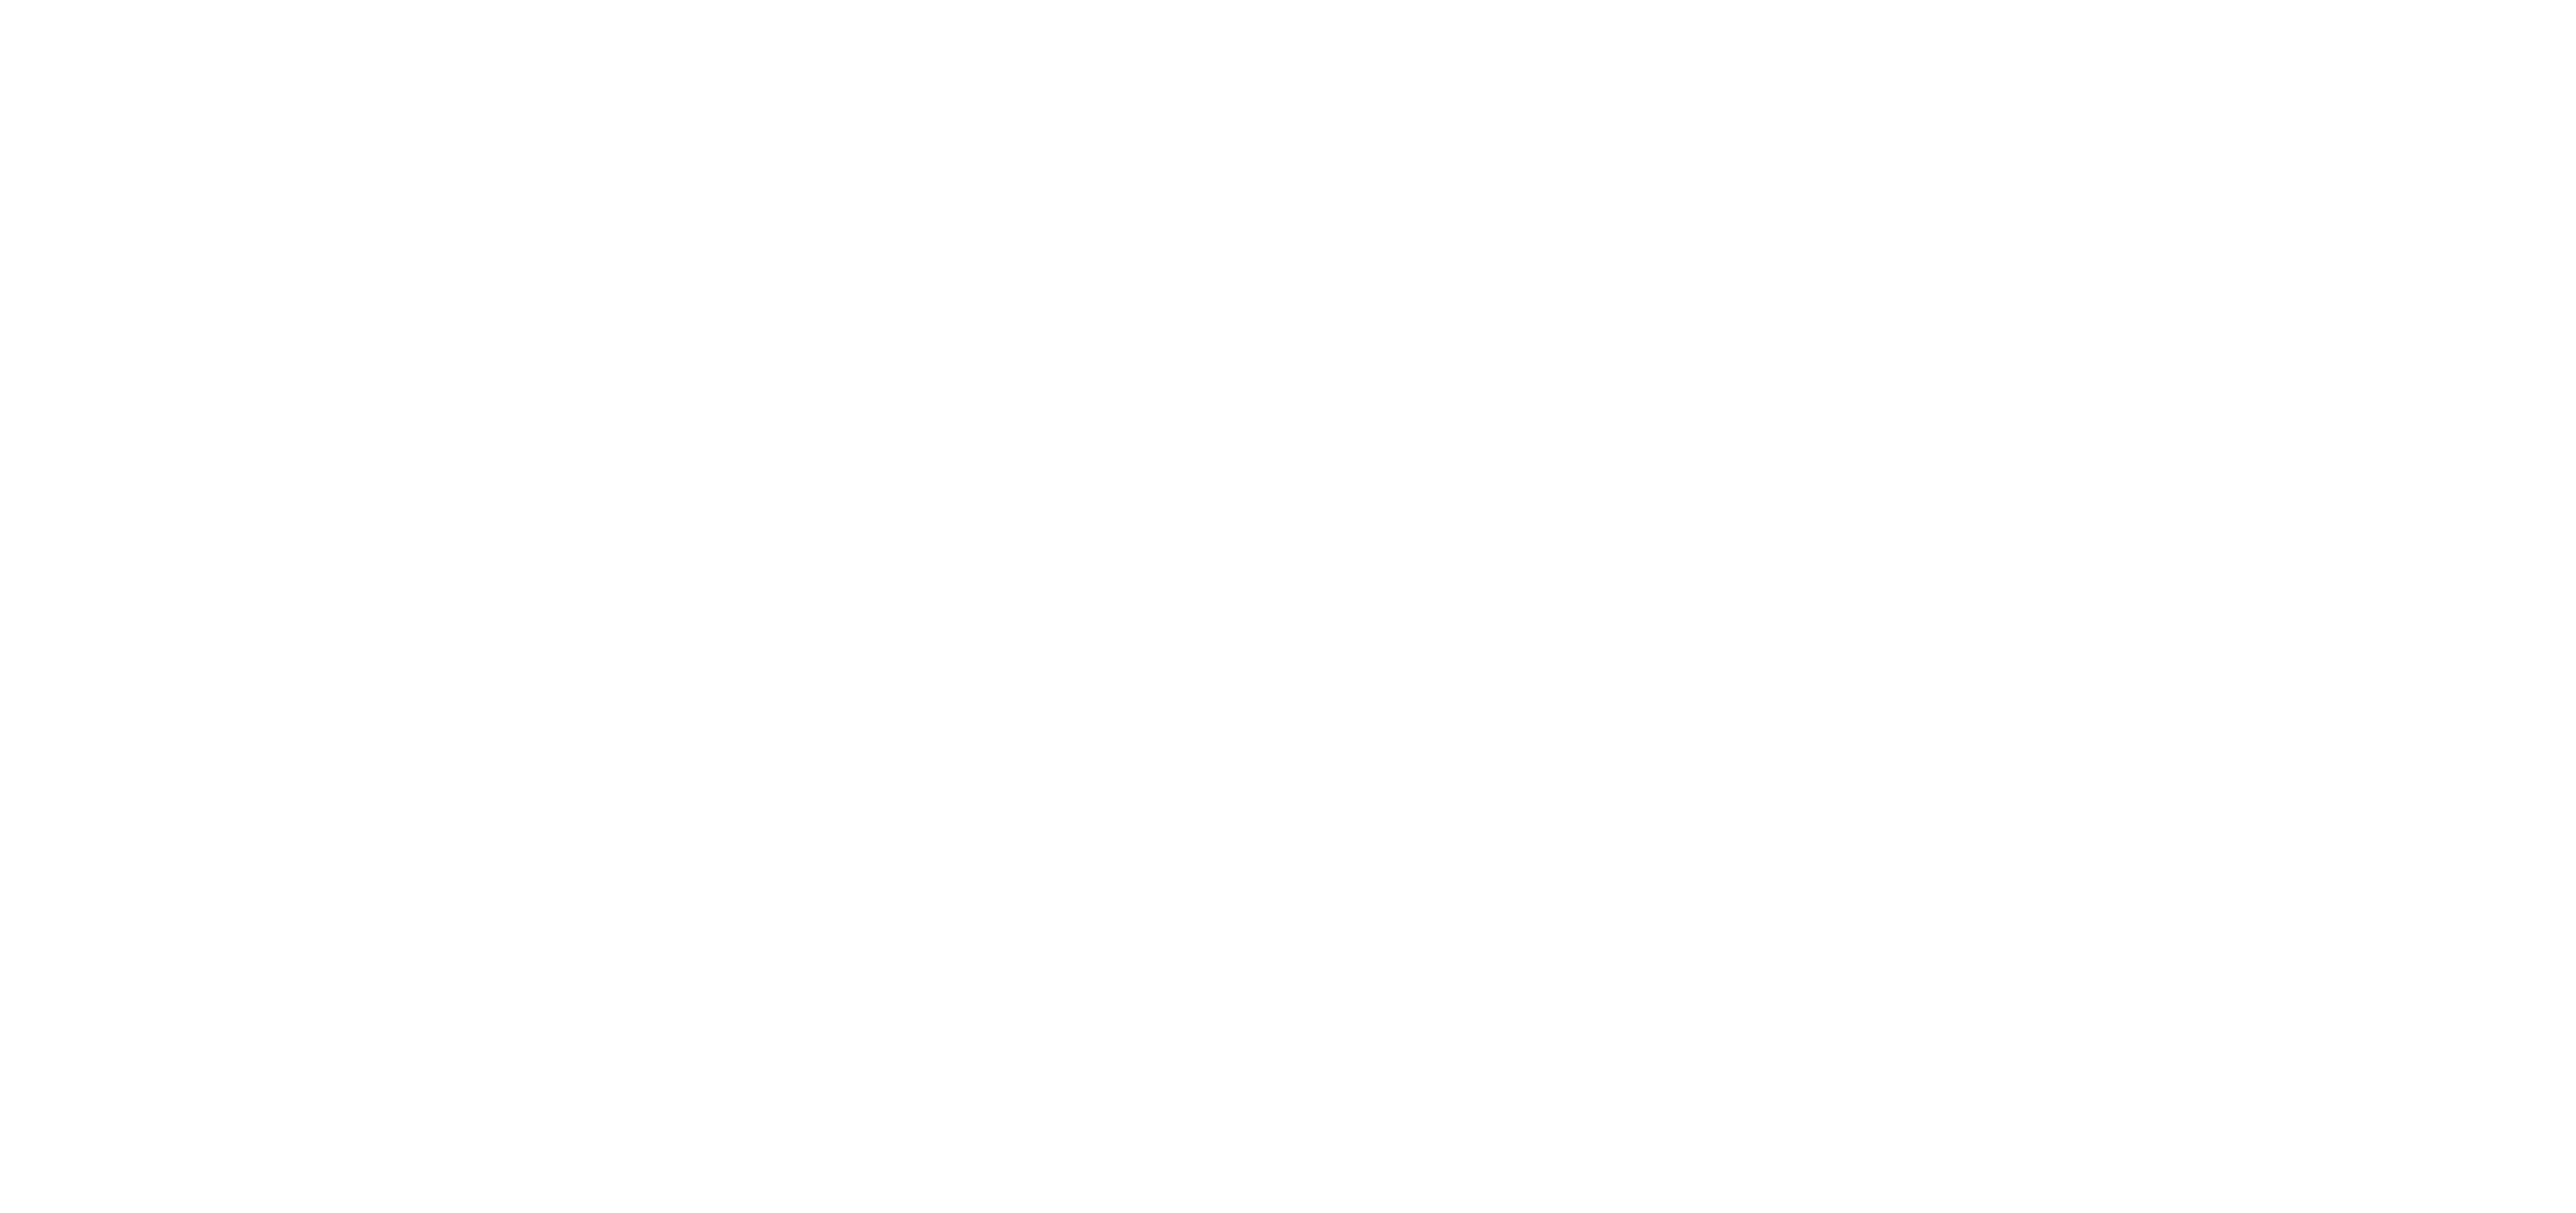 Last Words logo